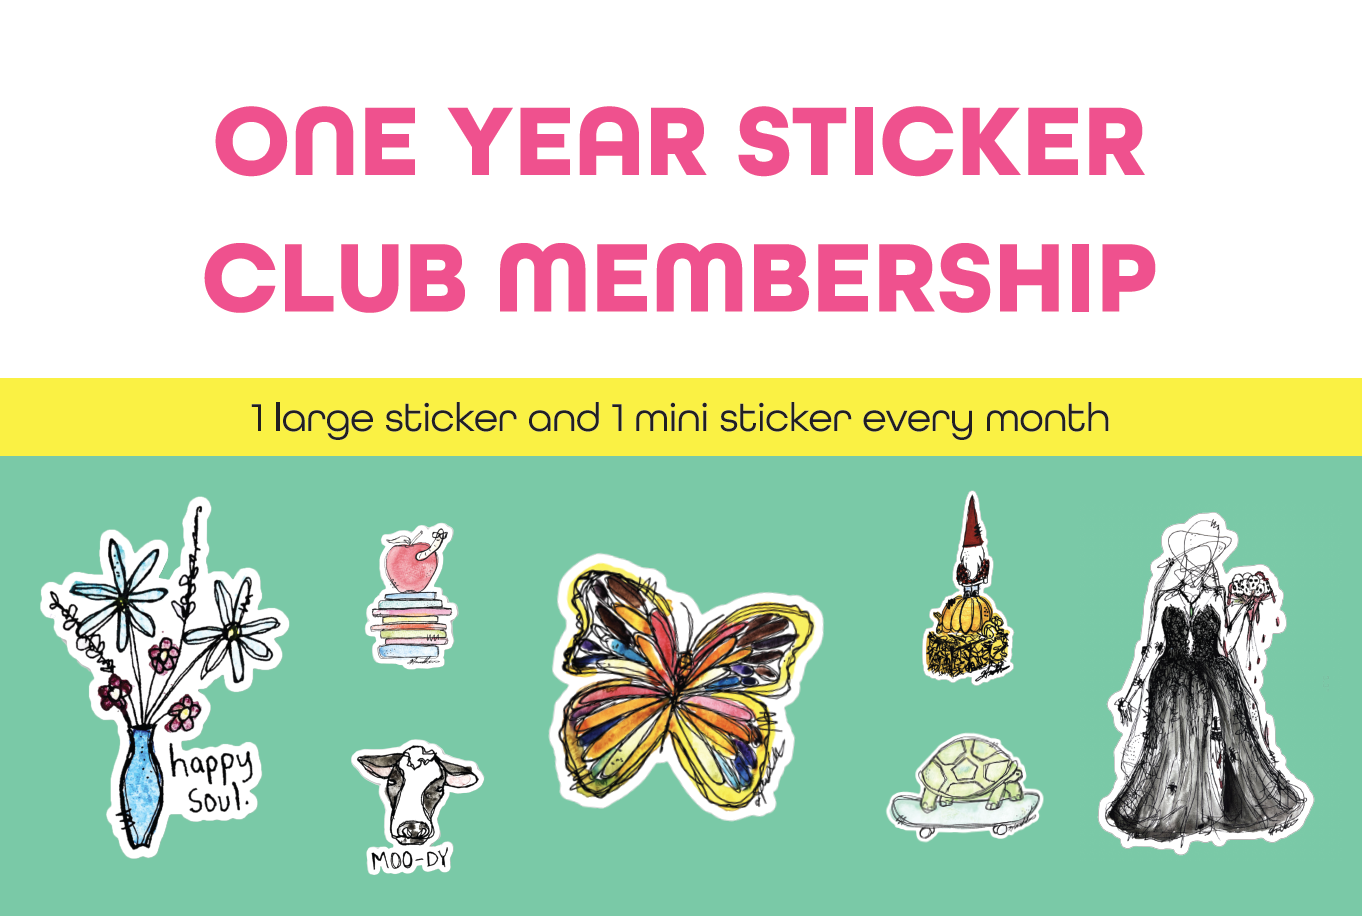 One Year Sticker Club Membership